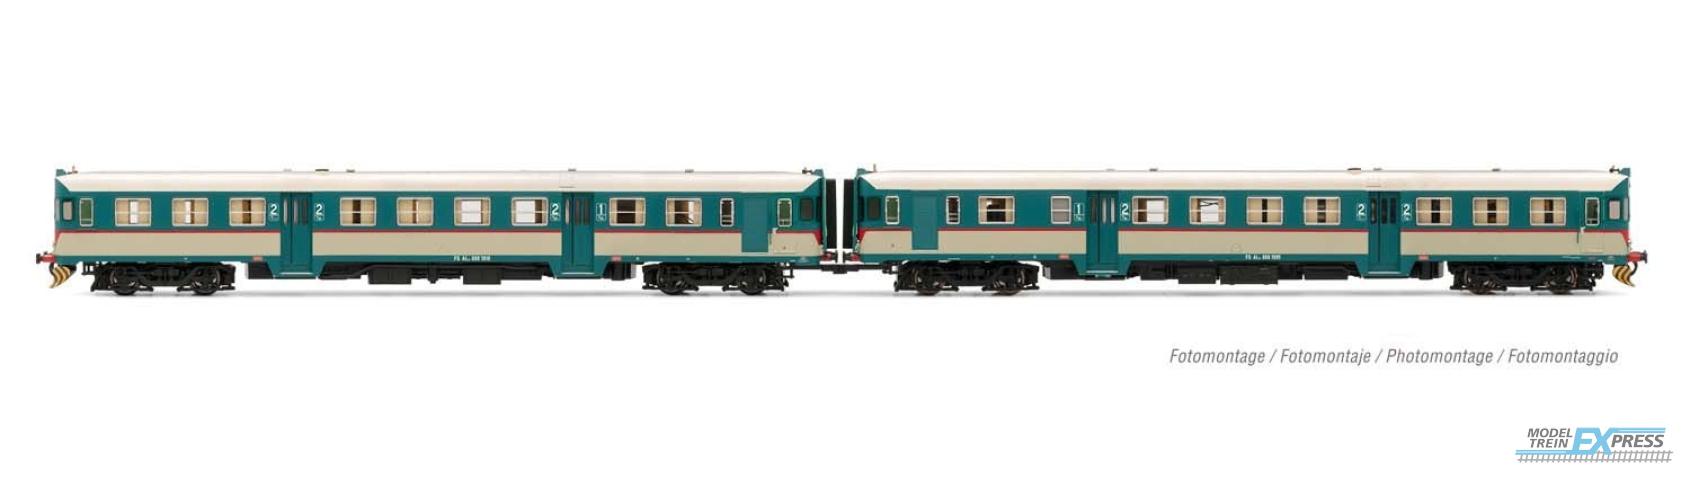 Lima 2653 FS, 2-unit pack of diesel railcars ALn 668 1900 original livery, motorized unit + dummy, period V